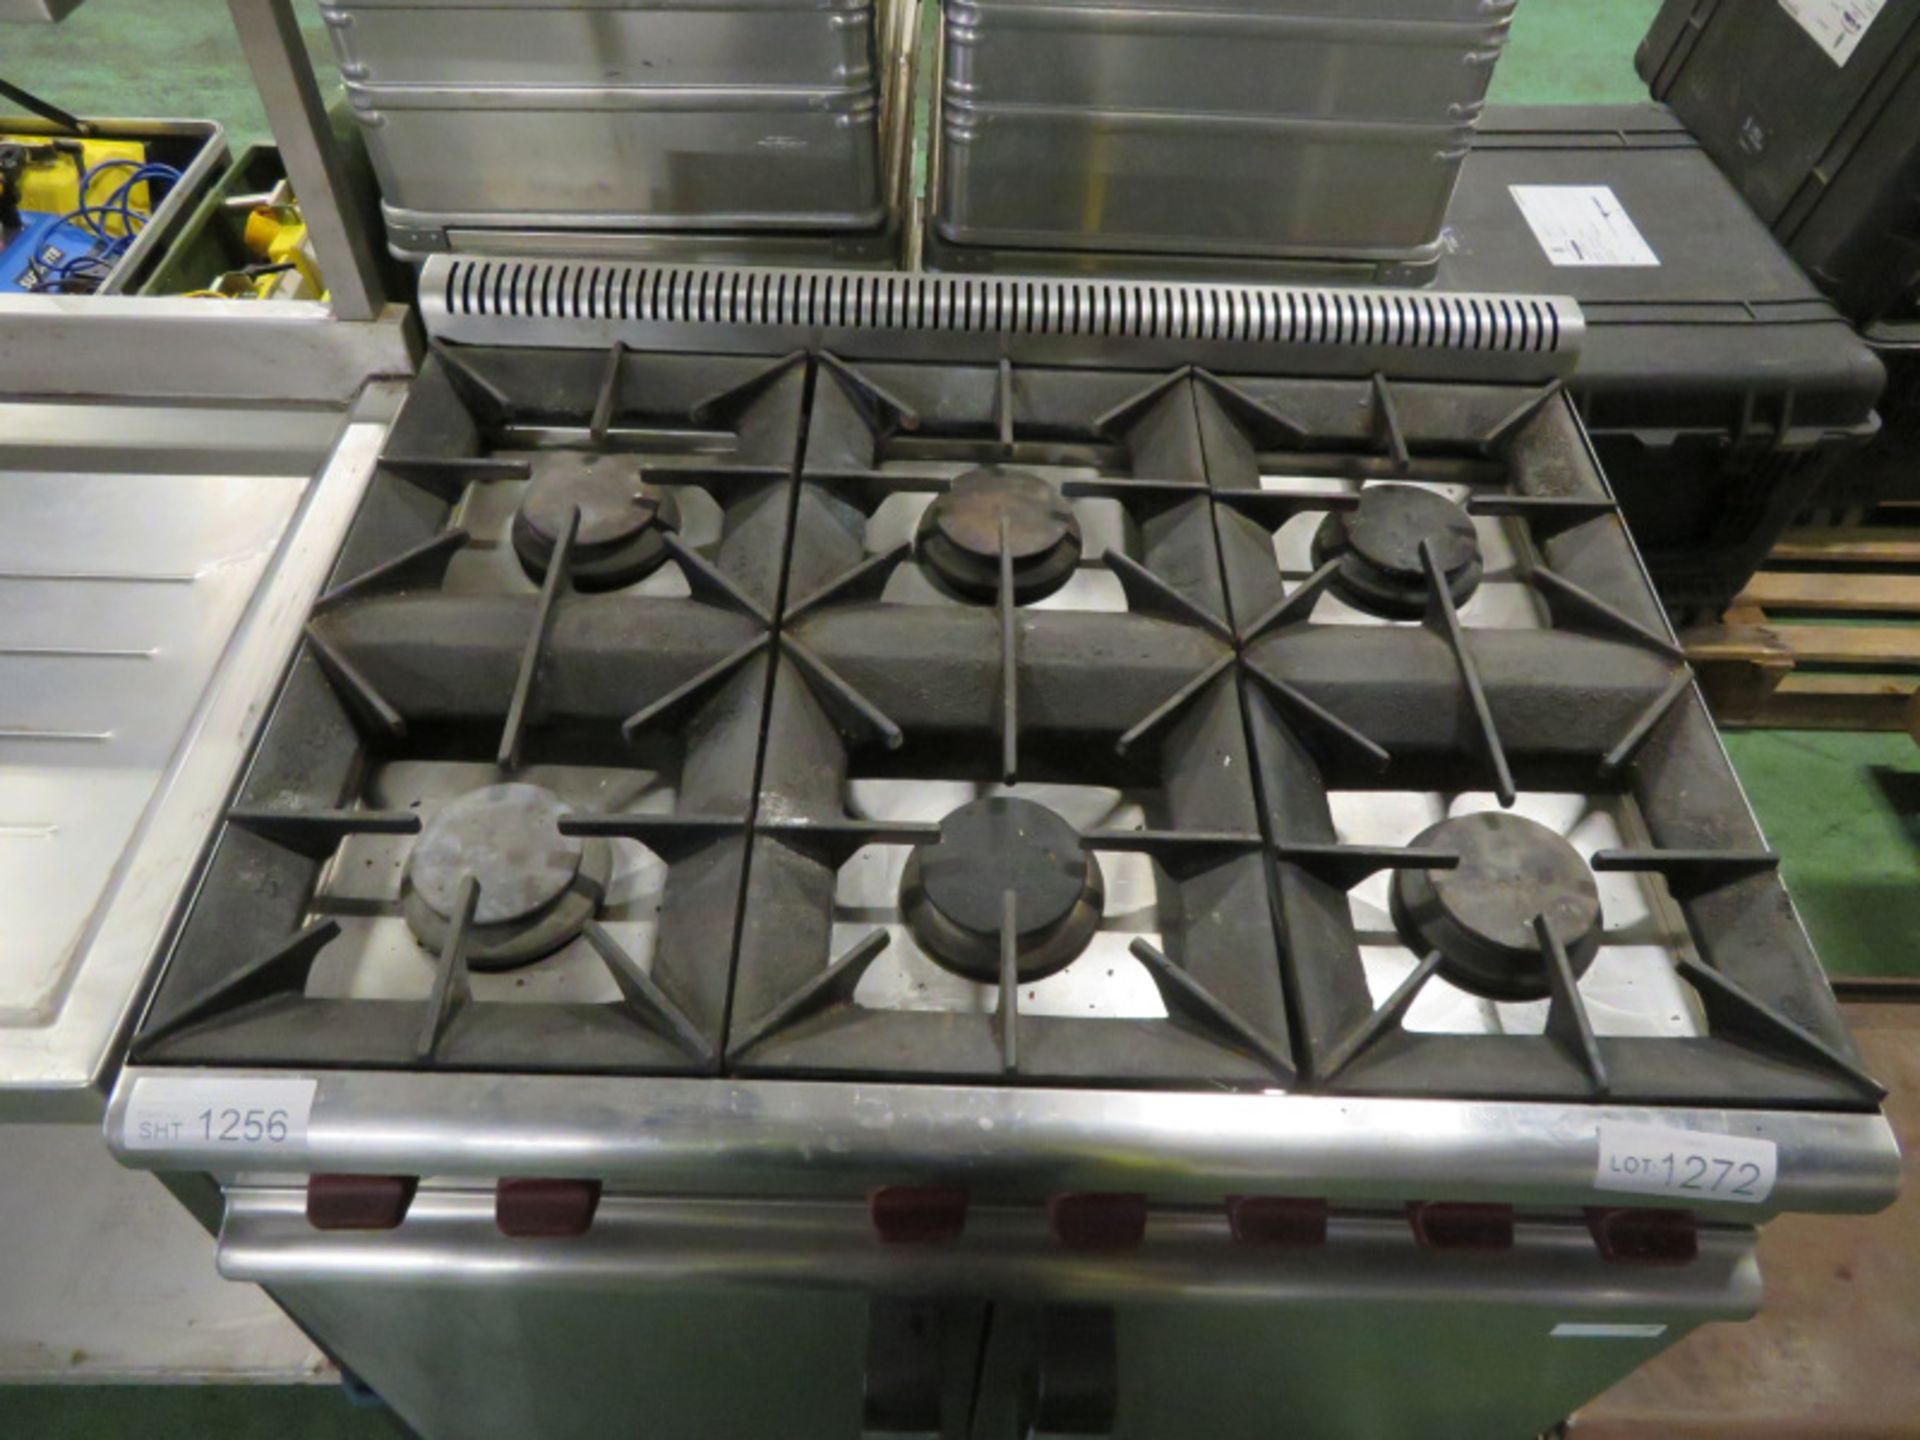 MV Mastercheff LPG gas 6 burner range oven - Image 3 of 5